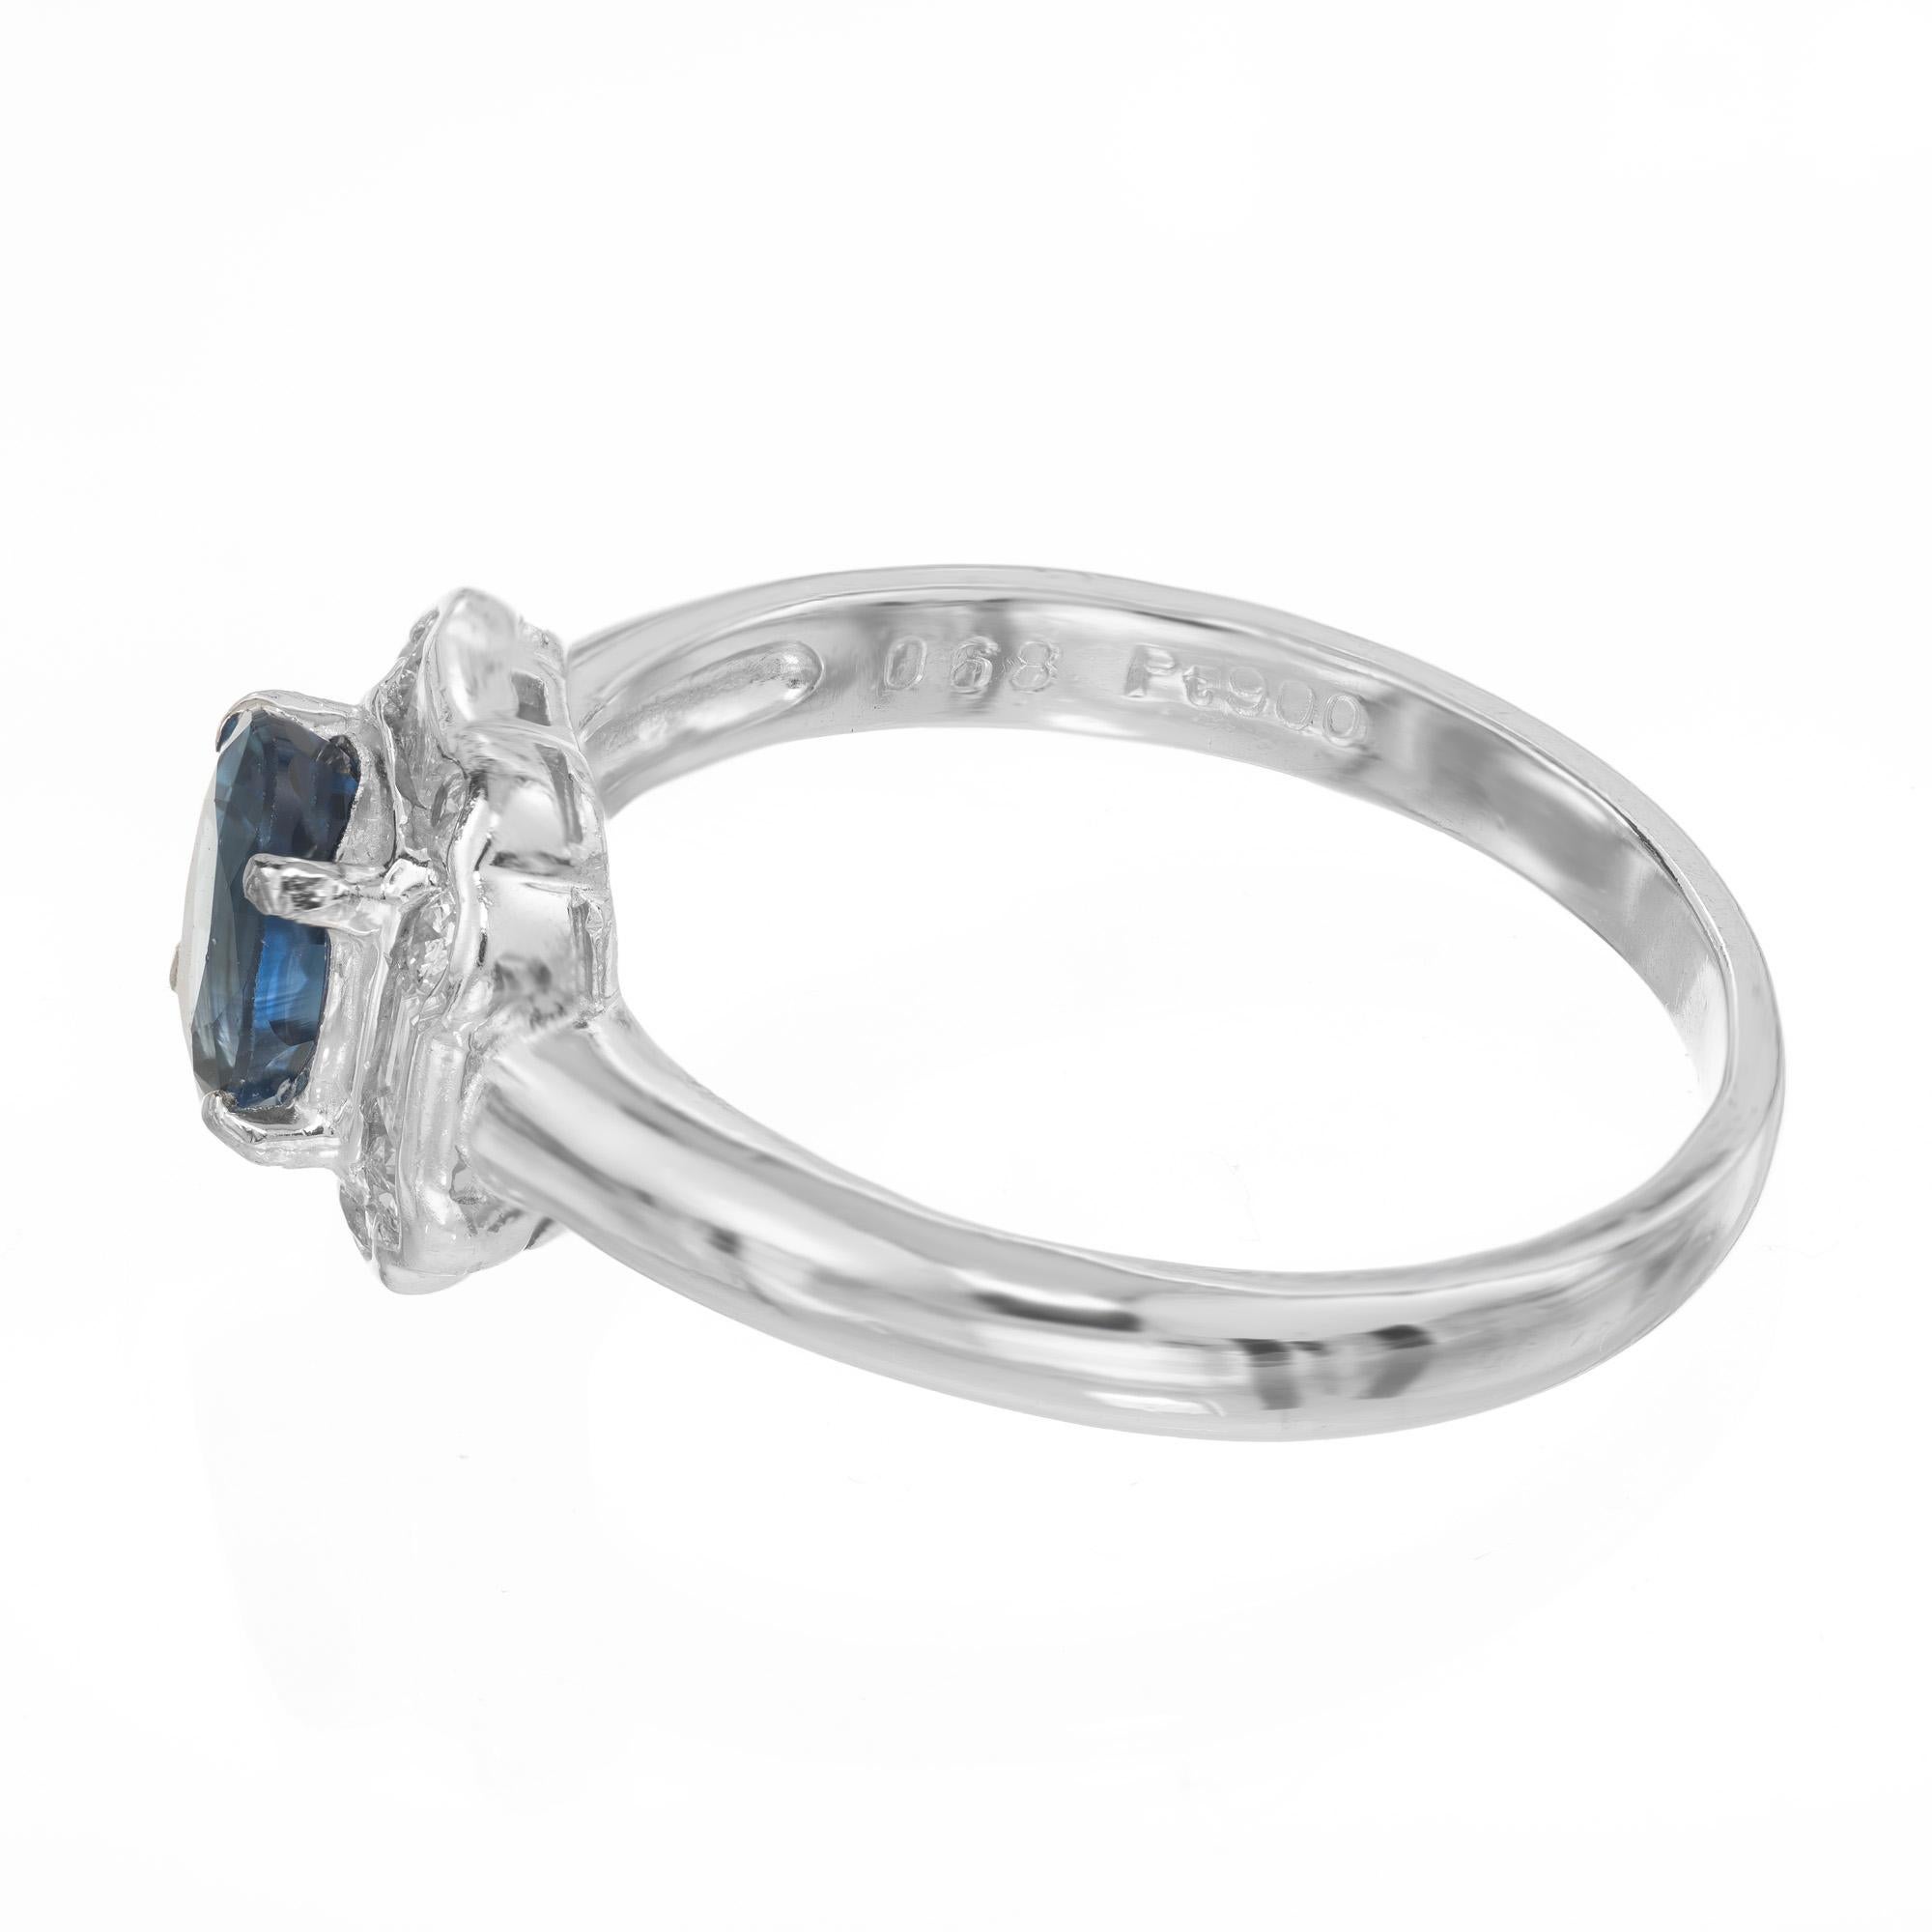 80 carat blue sapphire